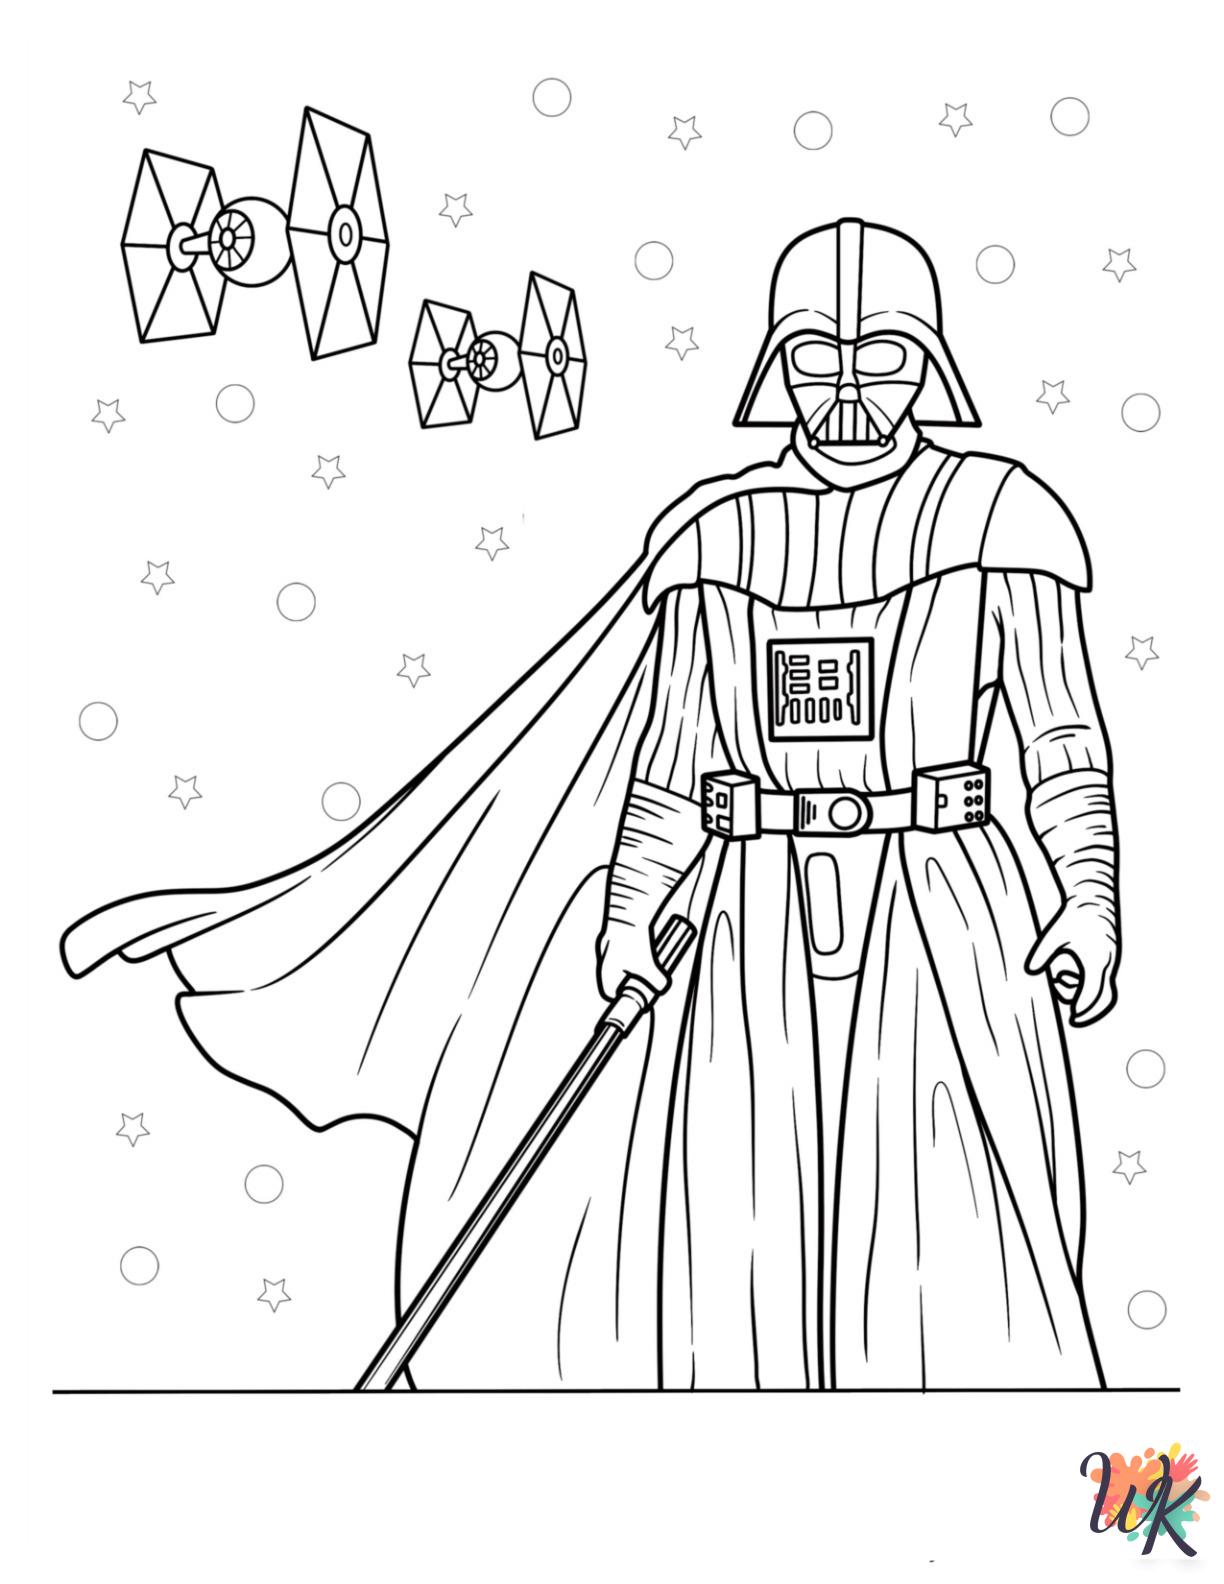 Darth Vader coloring pages free printable